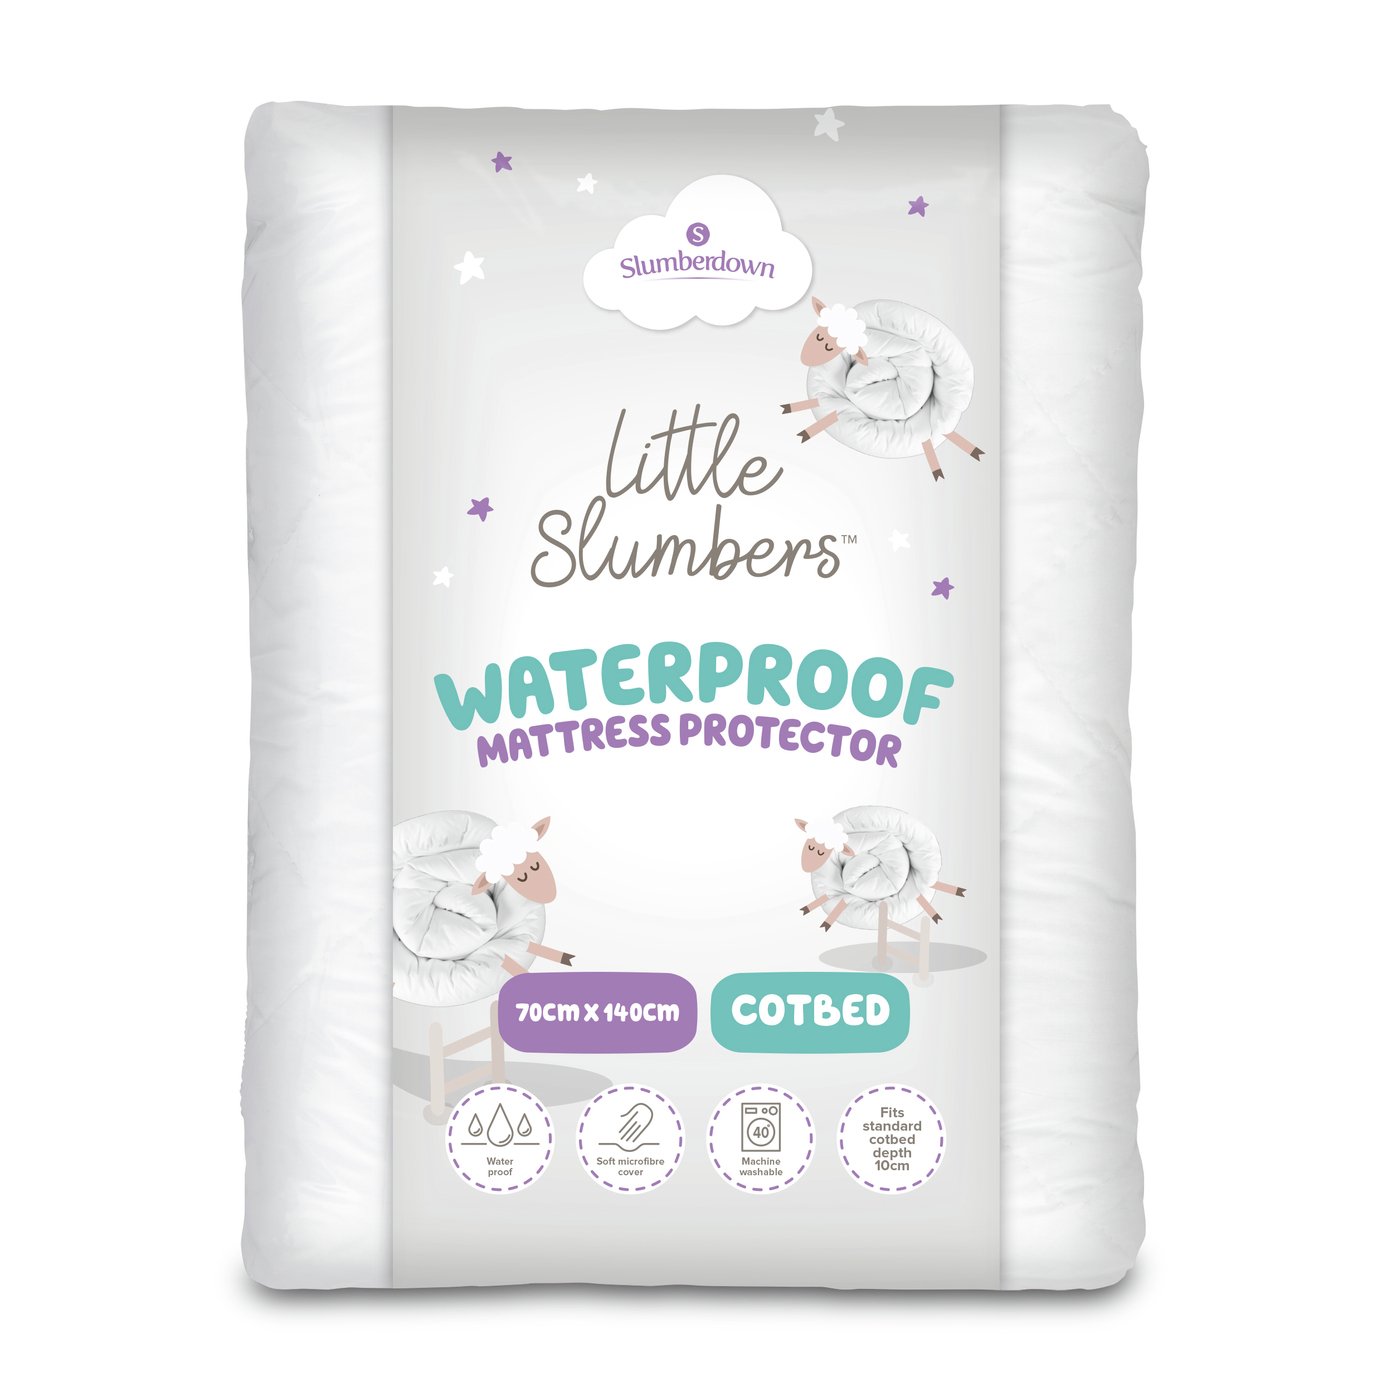 Little Slumbers Waterproof Soft Mattress Protector Review